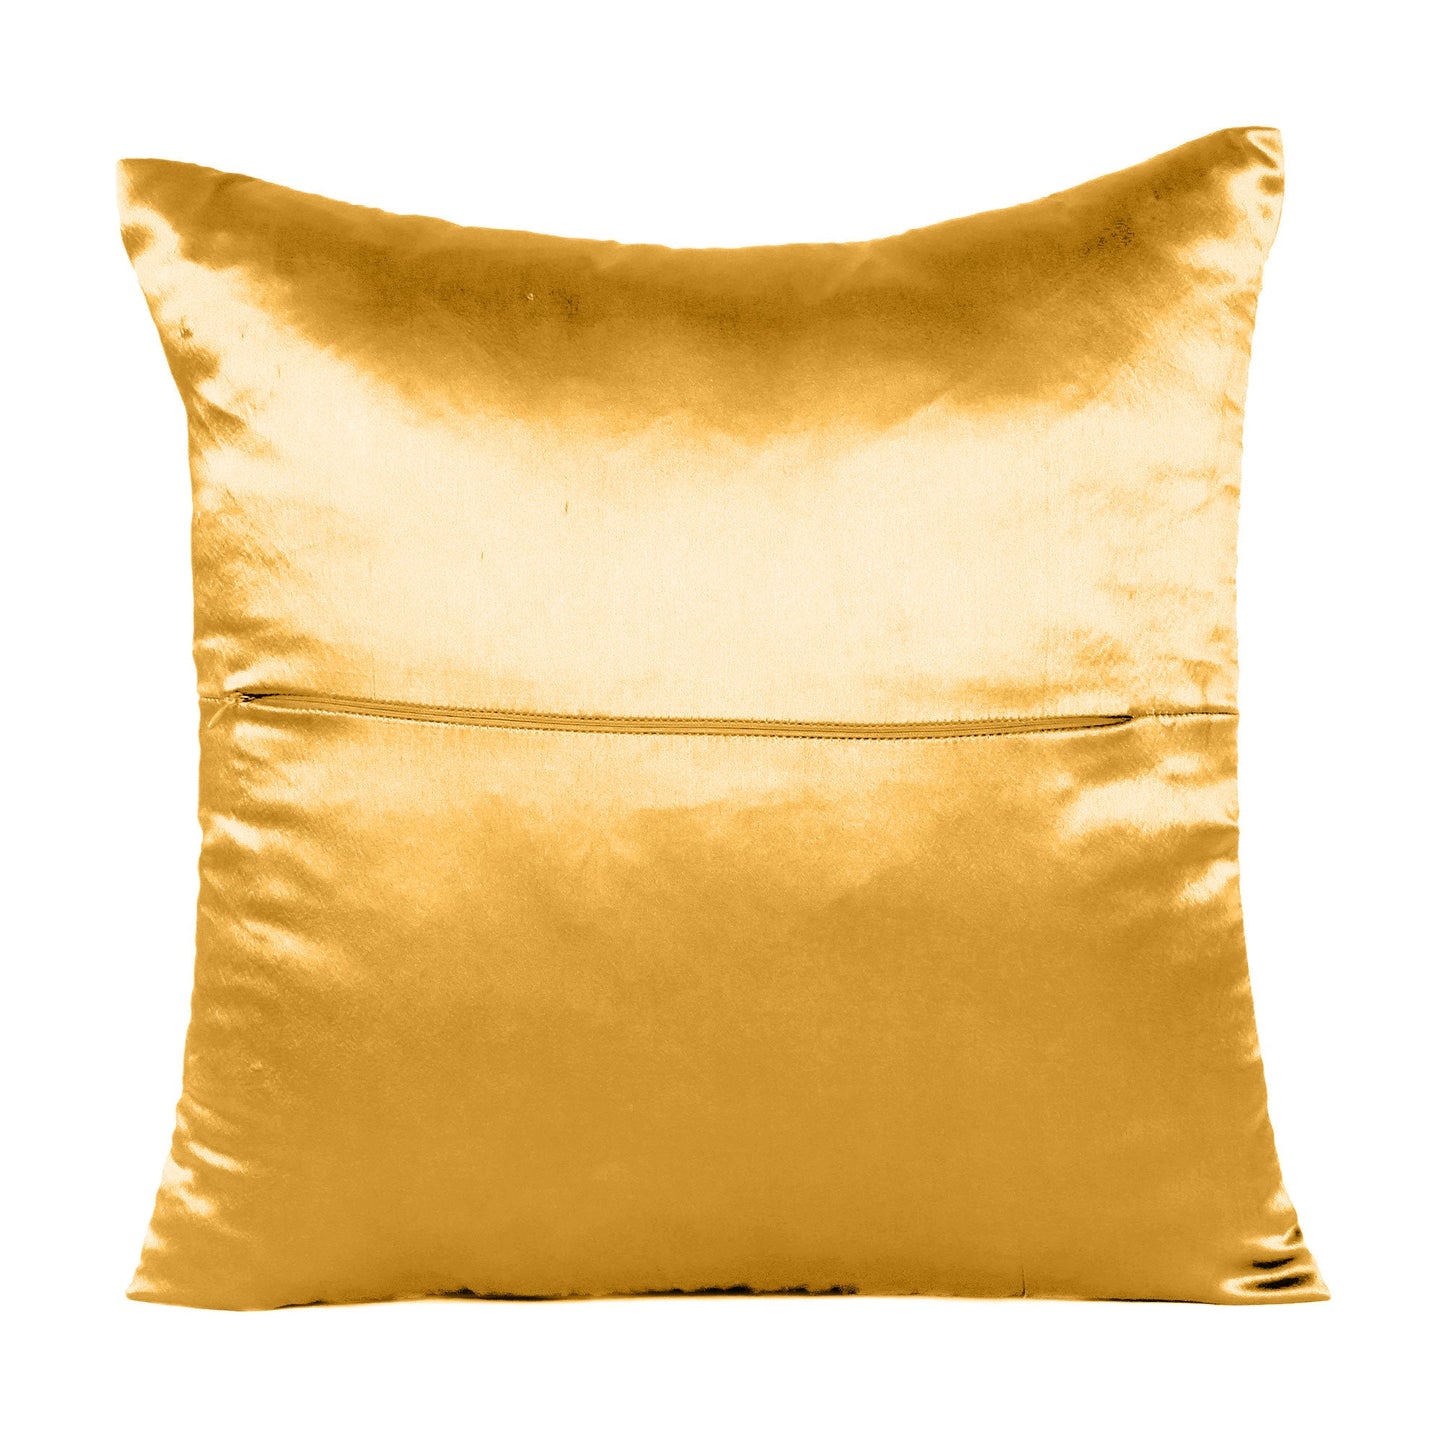 Luxury Soft Plain Satin Silk Cushion Cover in Set of 2 - Apricot Tan